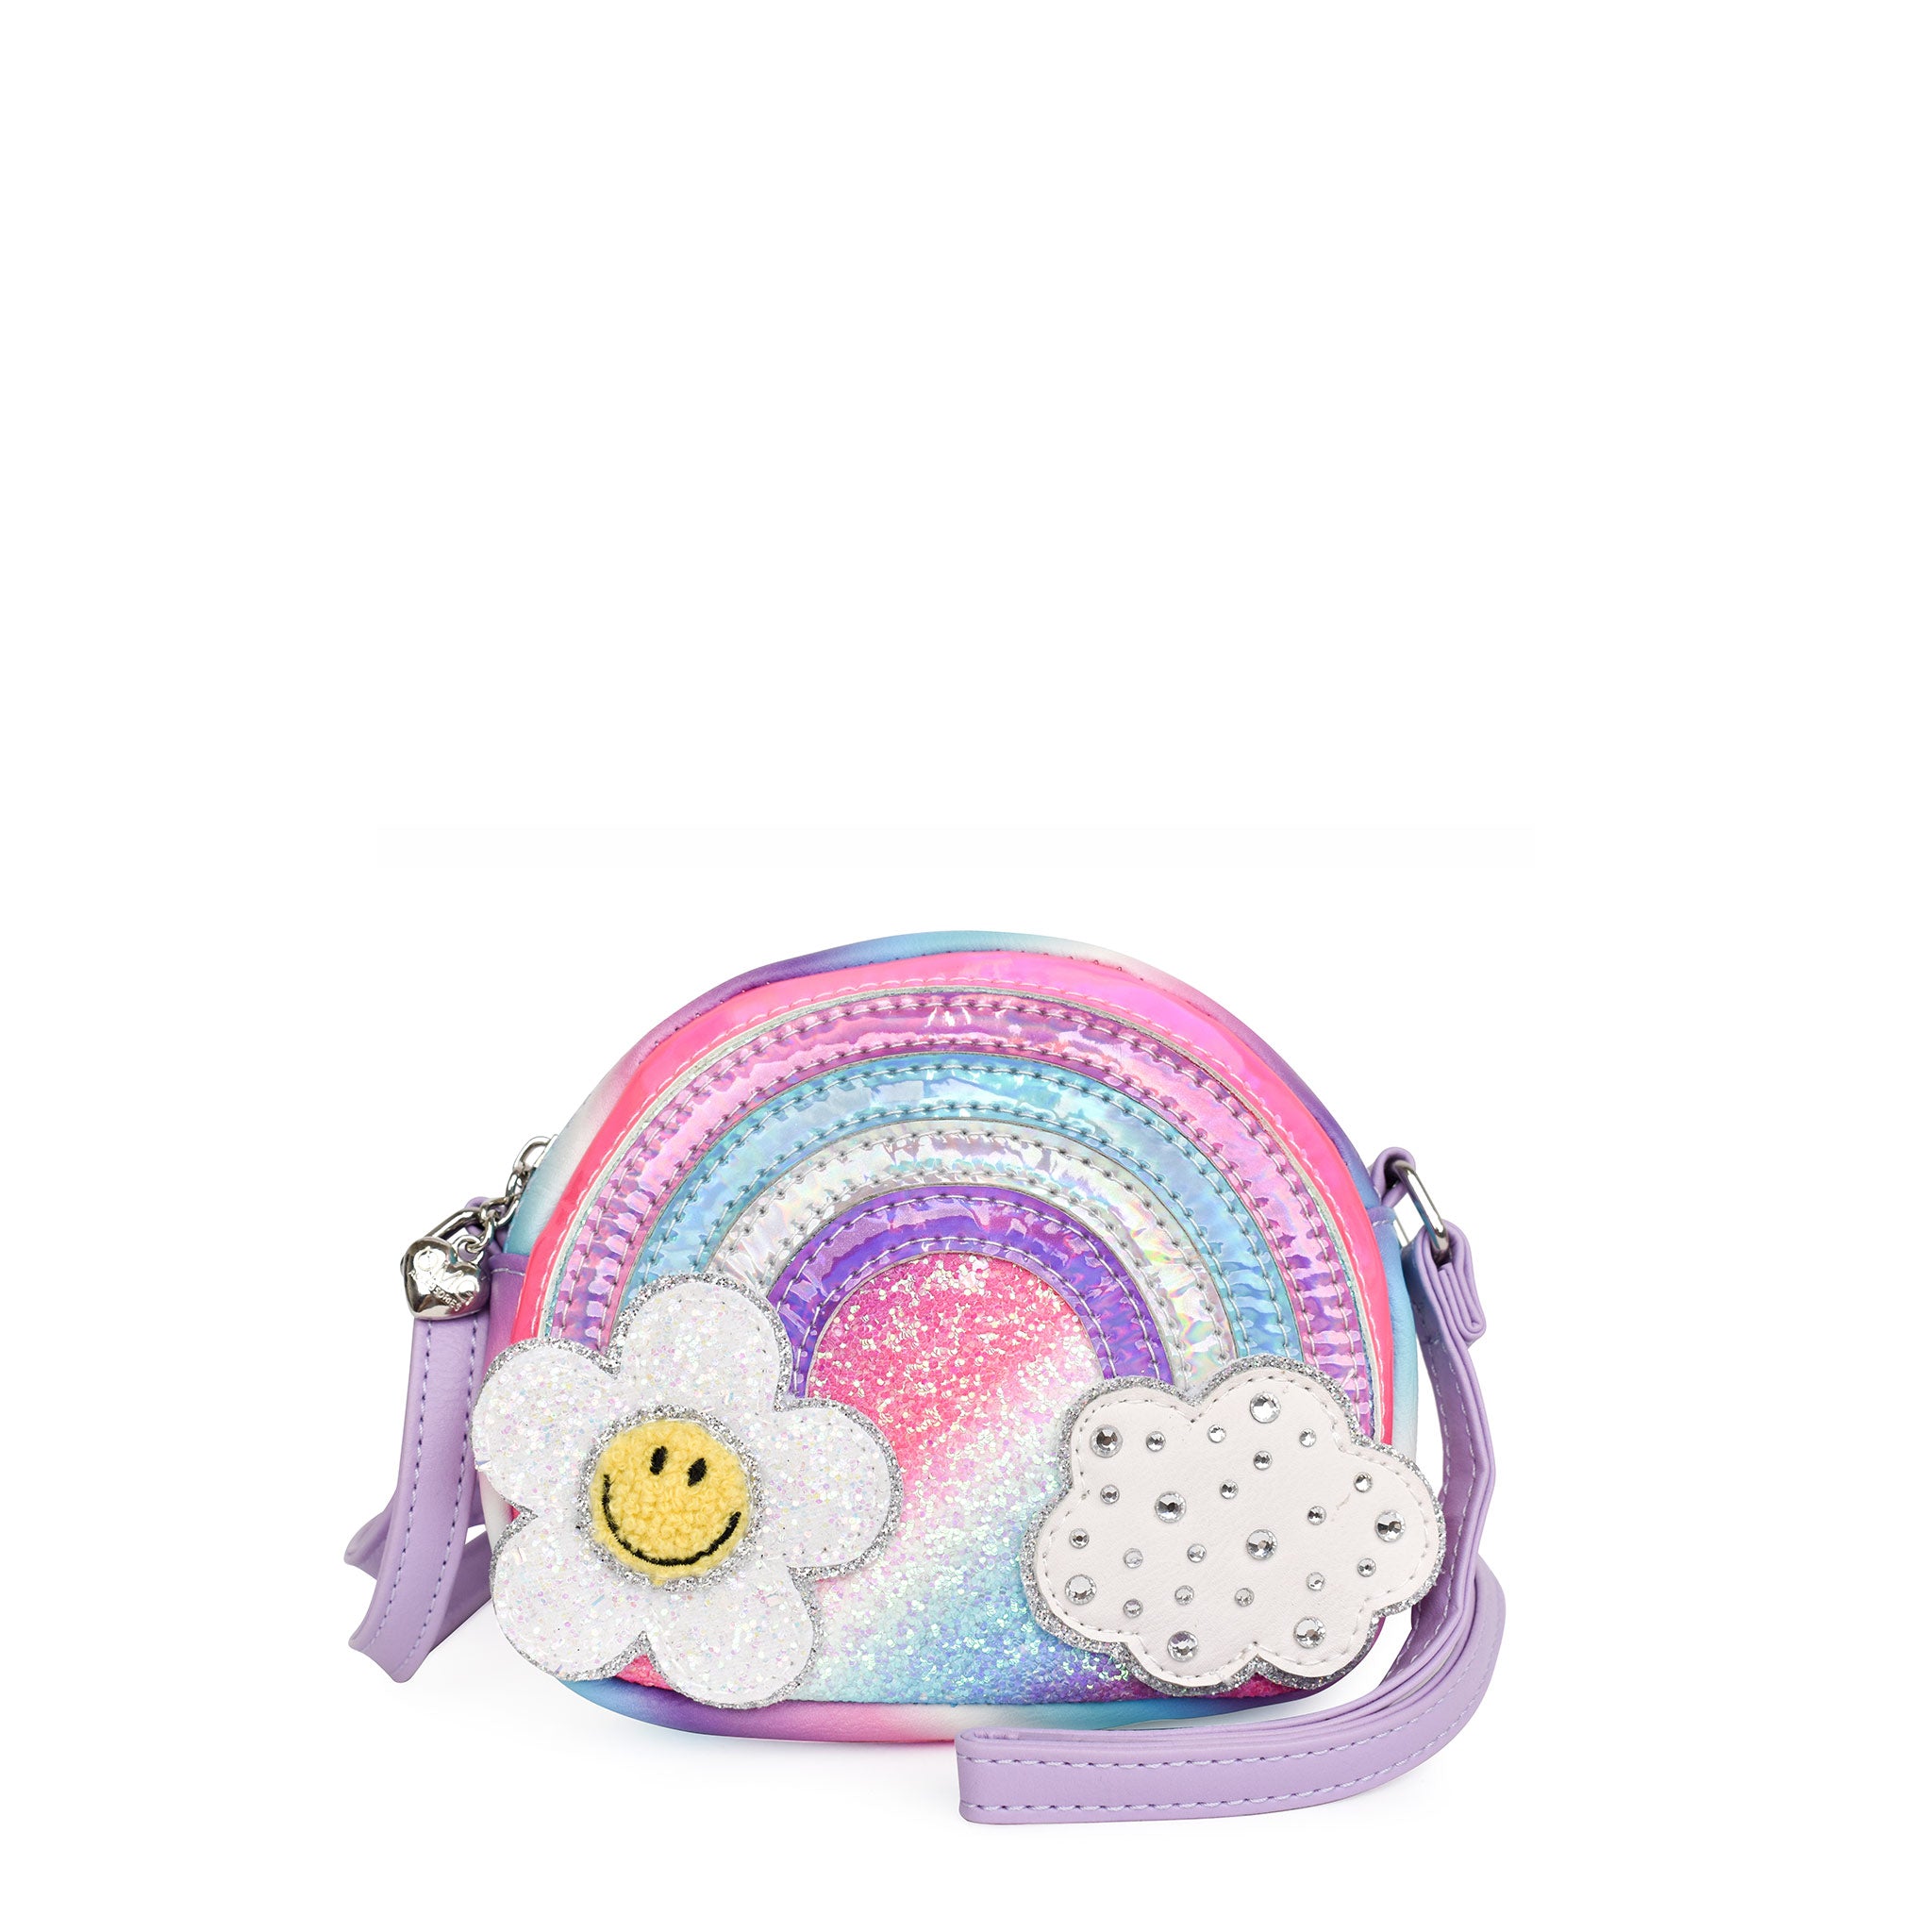 Loungefly Pride Rainbow Crossbody Bag Purse: Amazon.co.uk: Fashion